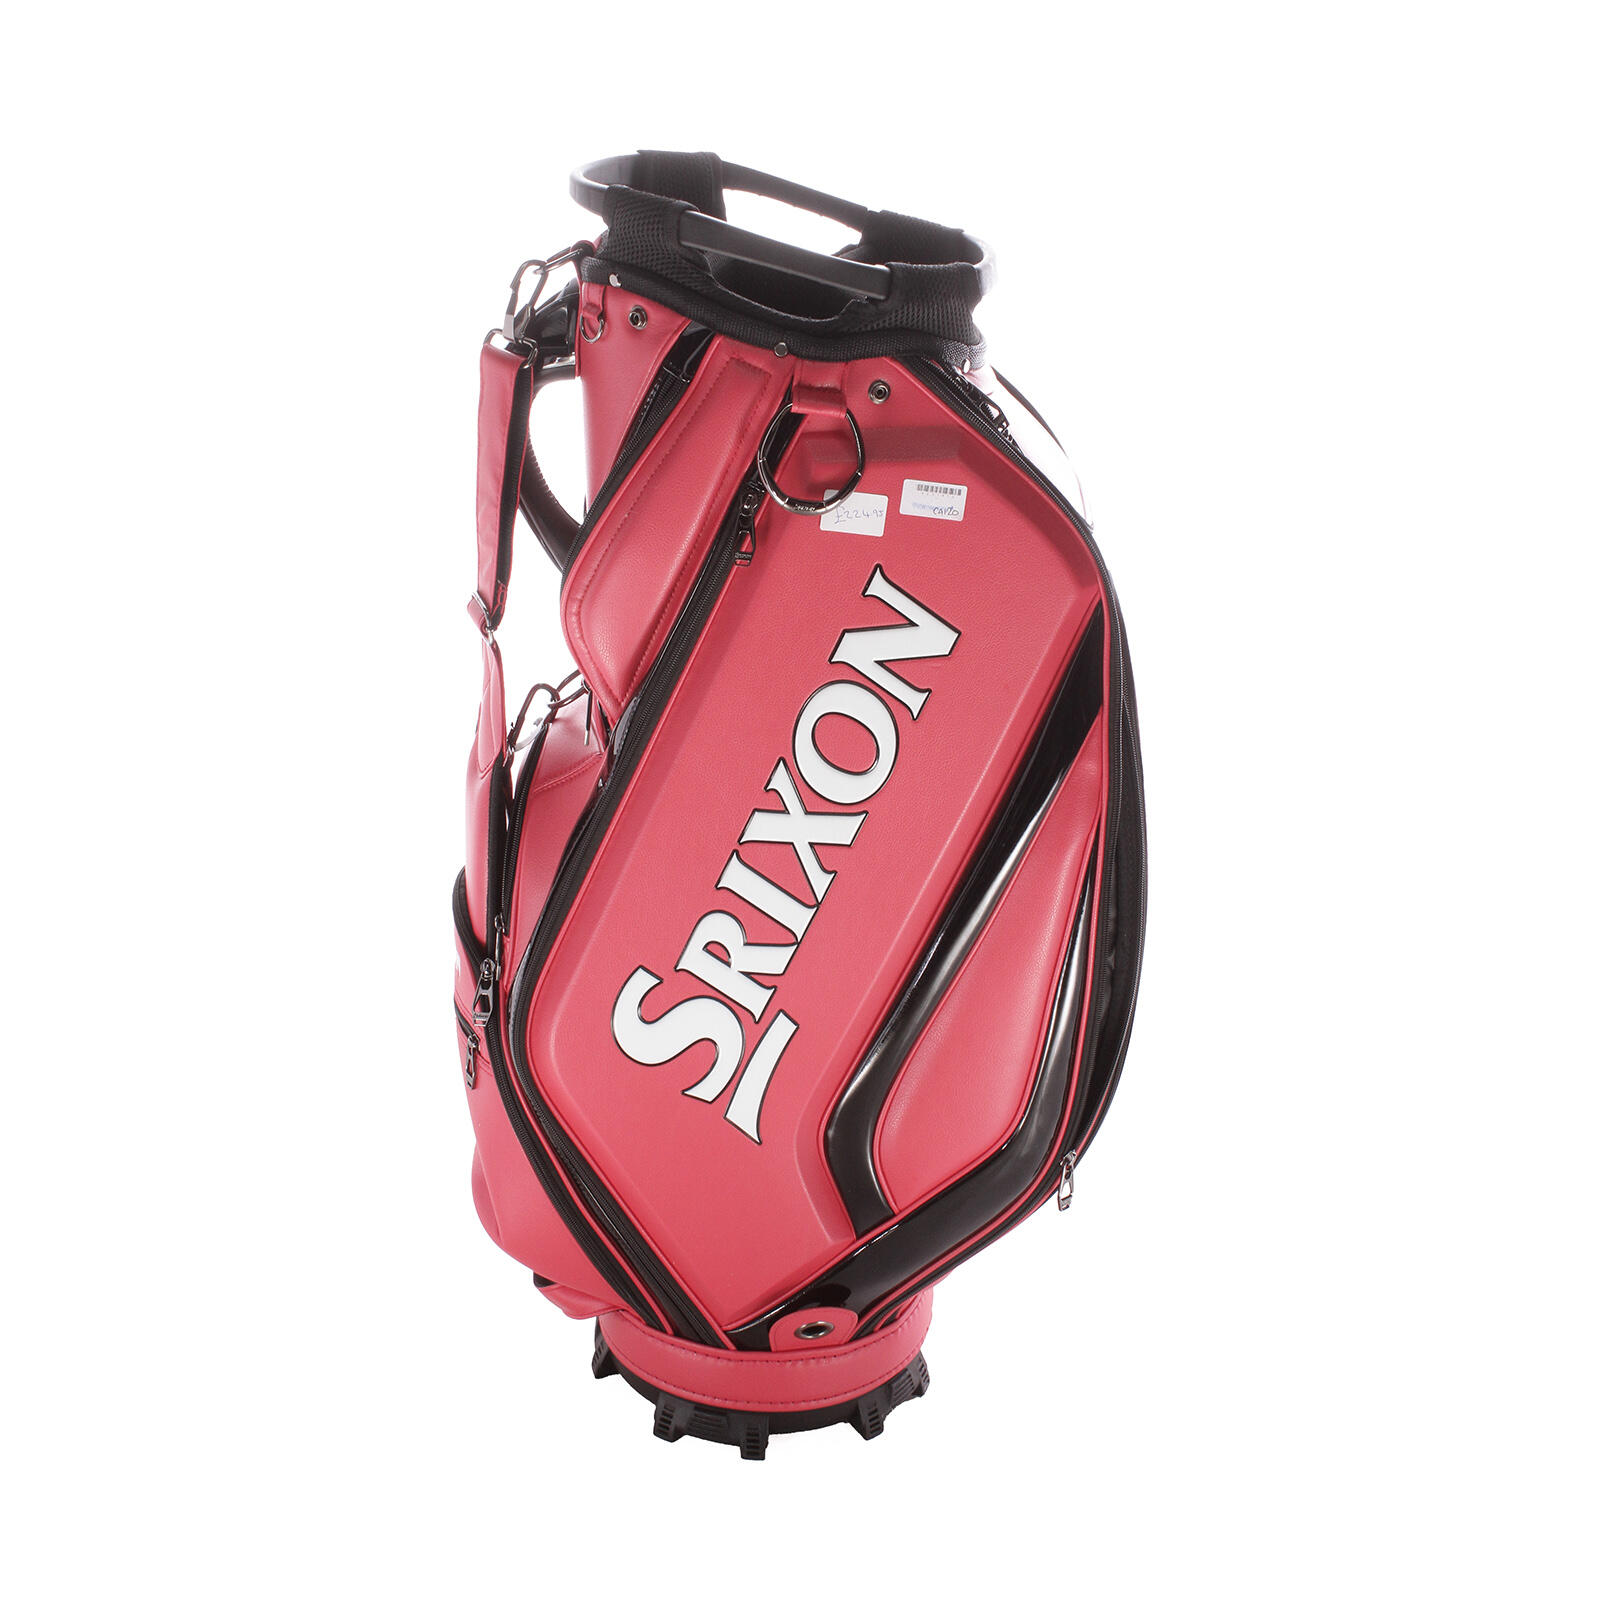 USED - Srixon Tour Bag with 4 Way Divider 10 Pockets & Single Strap - GRADE B 3/5